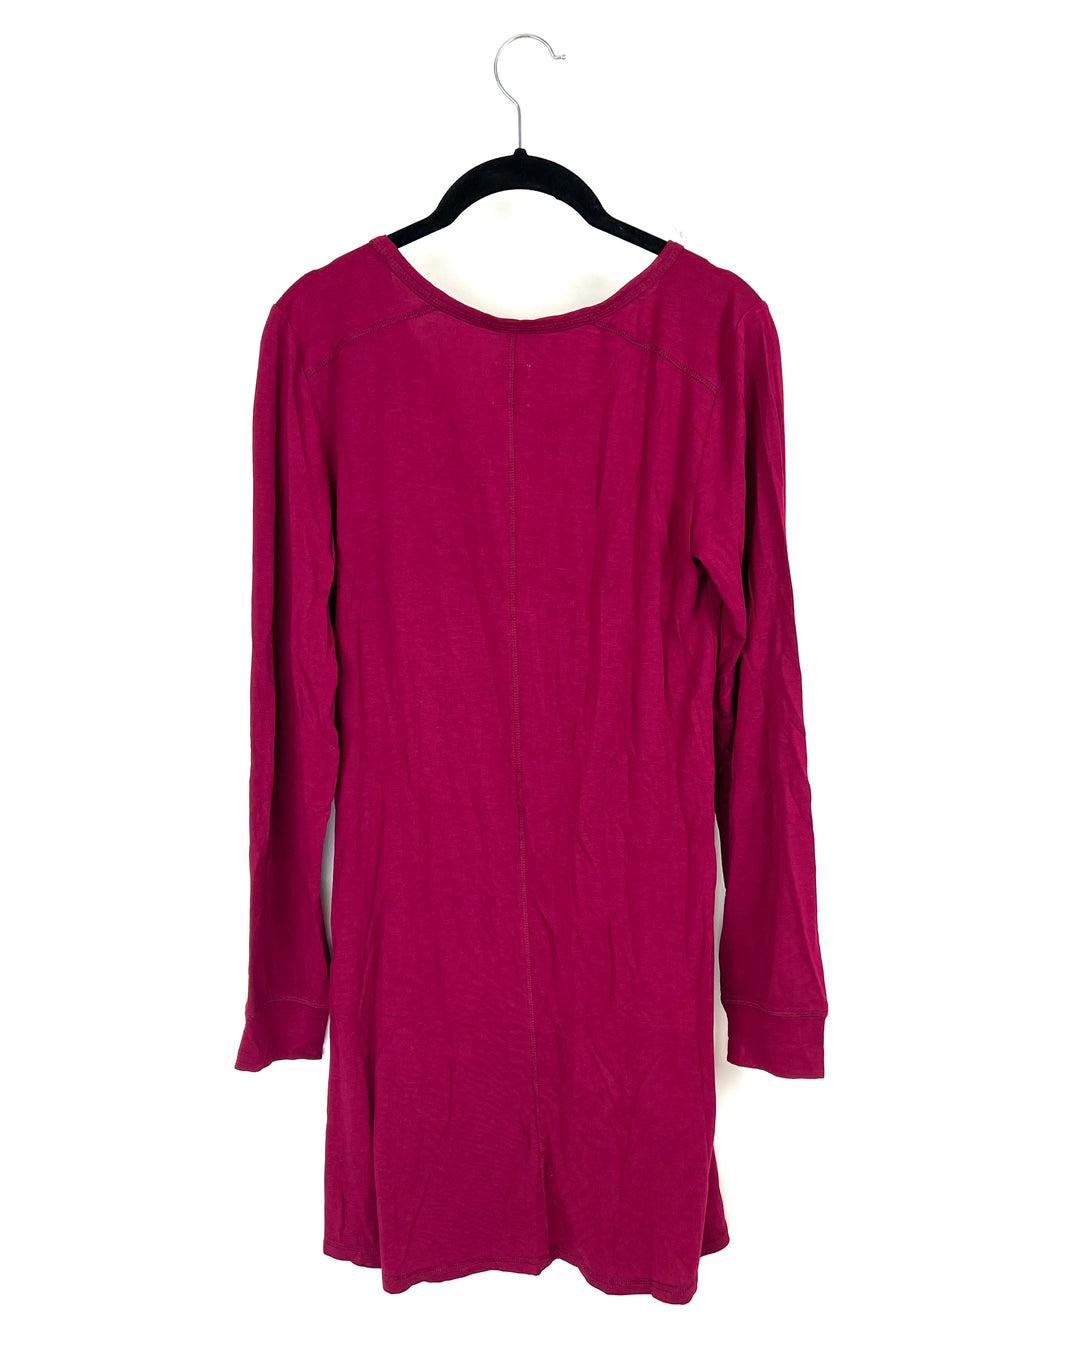 Maroon Lightweight Long Sleeve Nightgown - Small